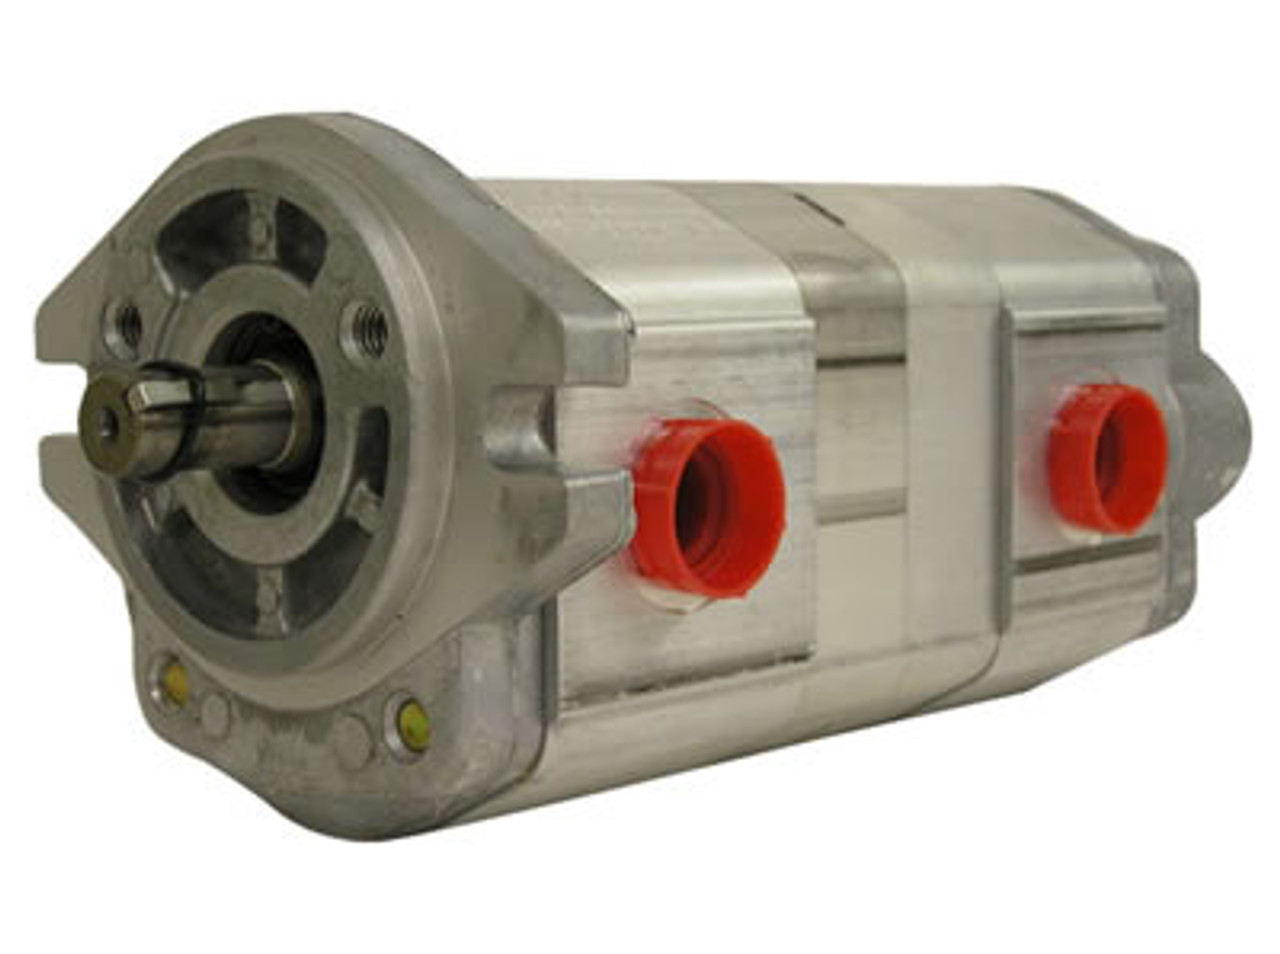 2DG1BU1414L Honor Pumps USA Tandem hydraulic gear pump 6.44 GPM/6.44 GPM @ 1800 RPM  Honor Pumps USA